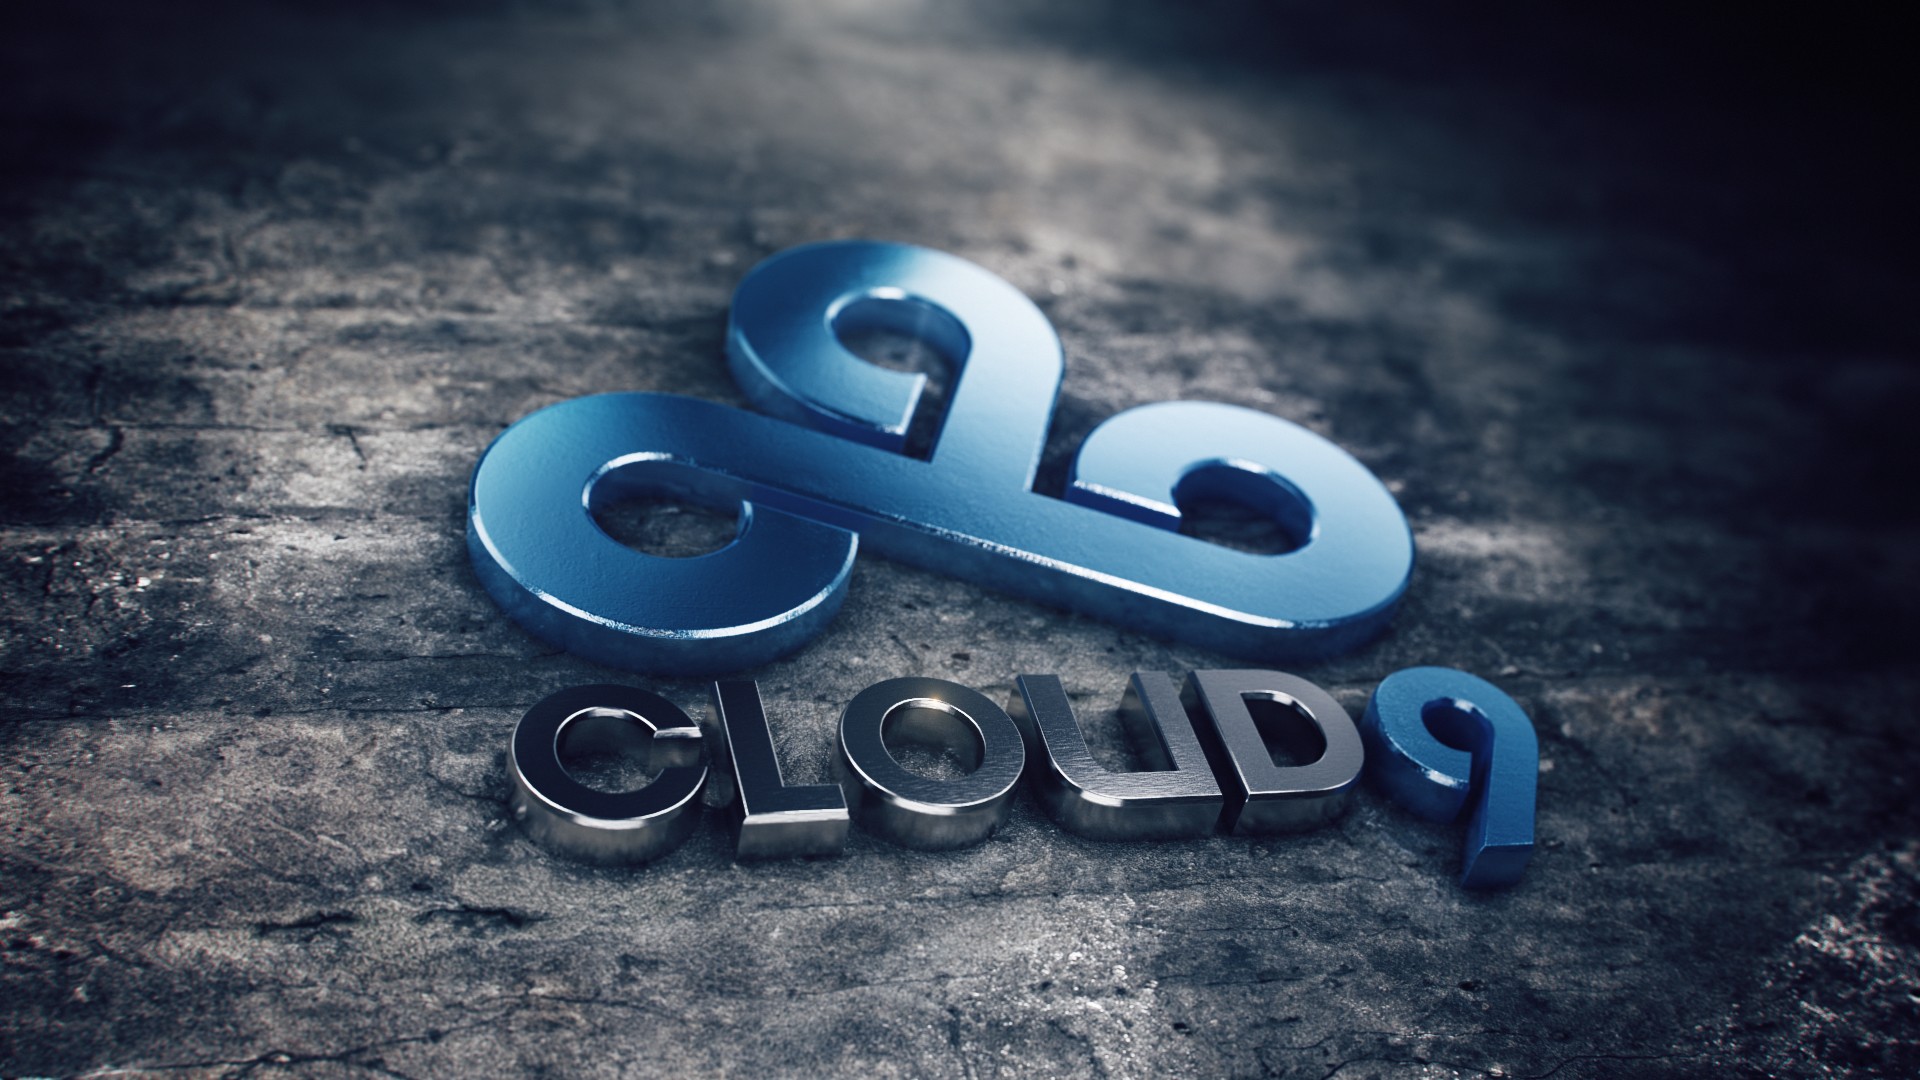 Cloud9 Background Wallpaper Hd